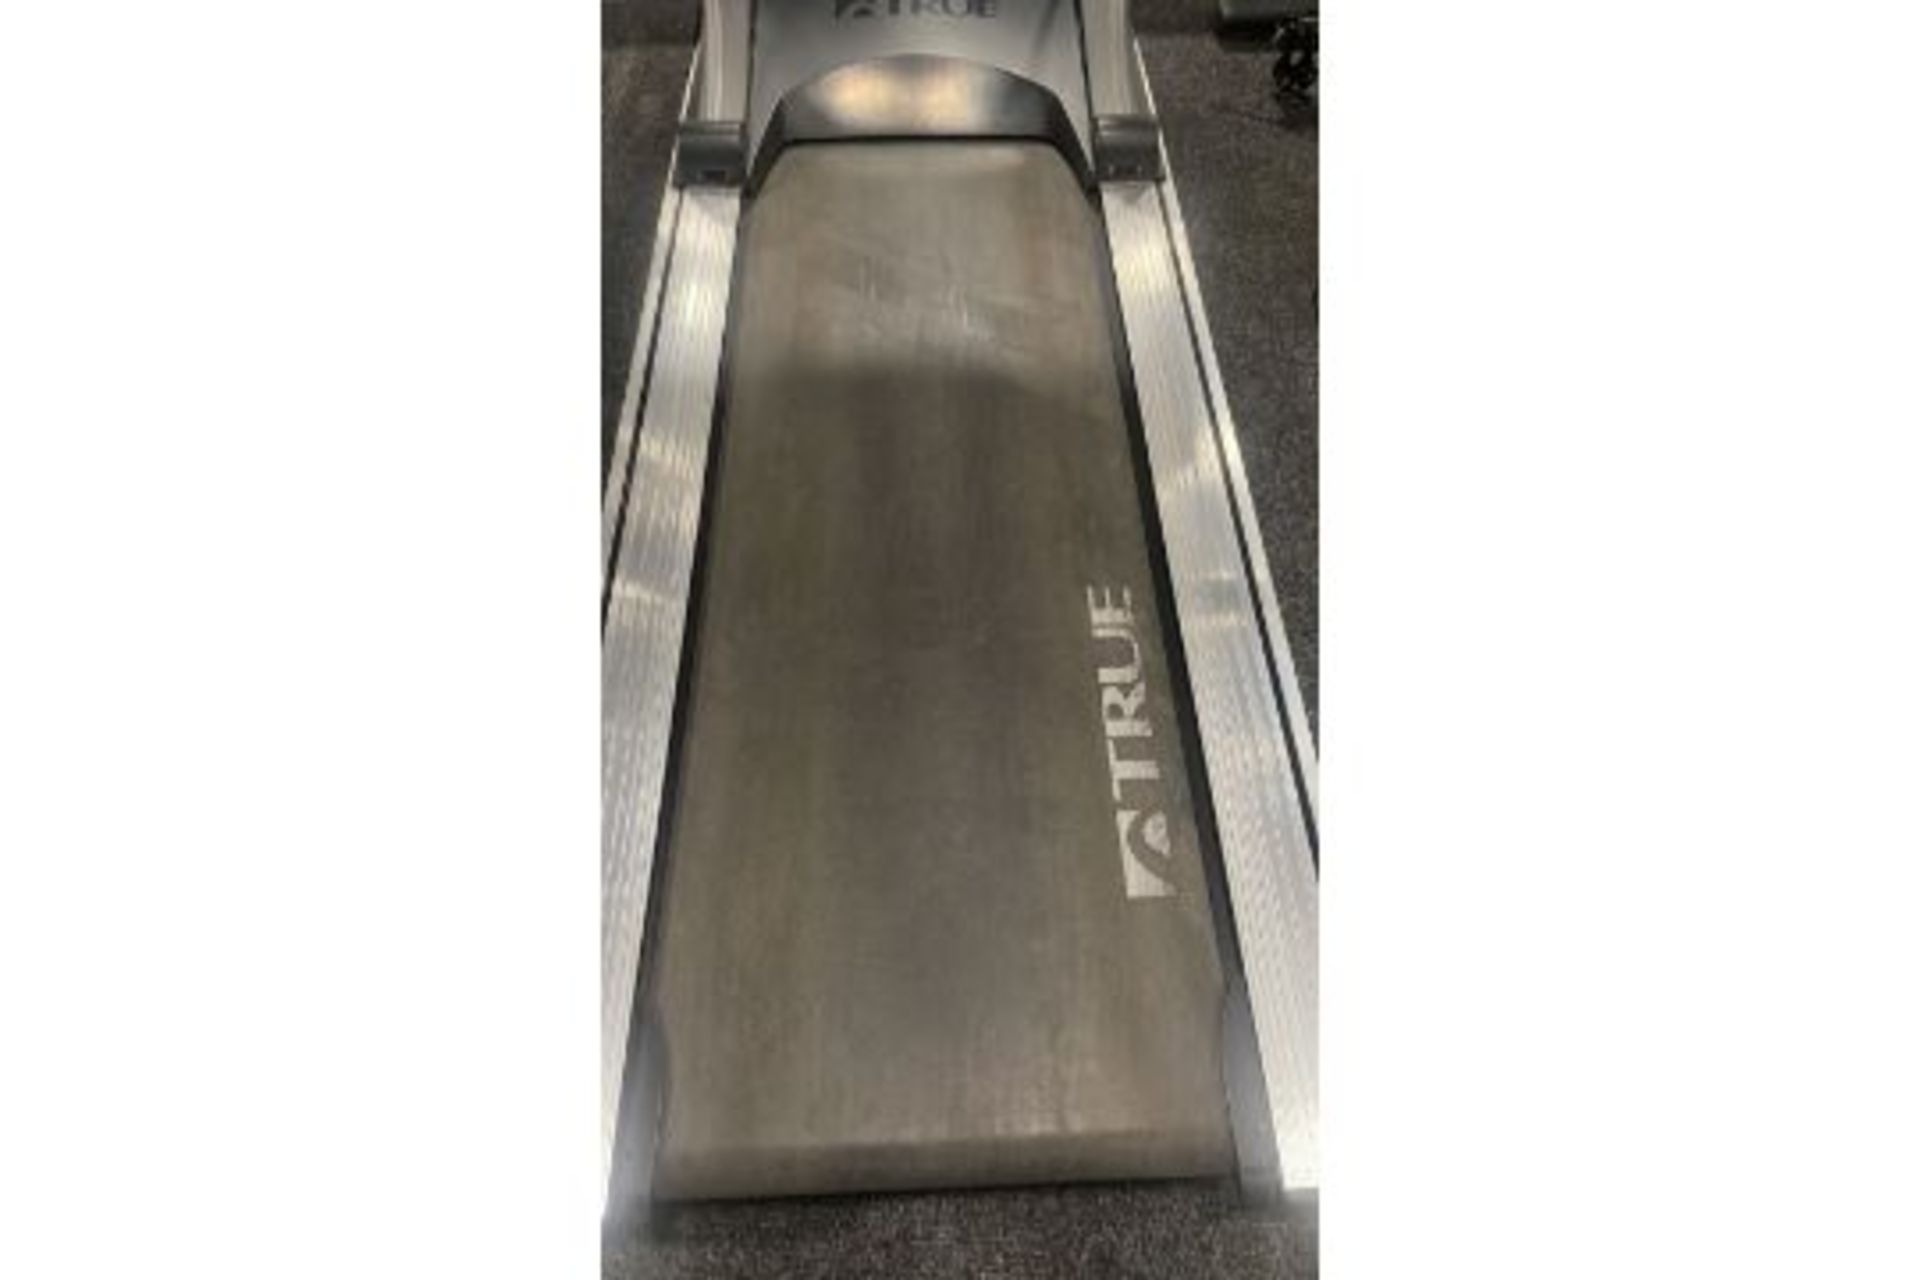 True Fitness 600 Treadmill - Bild 4 aus 5